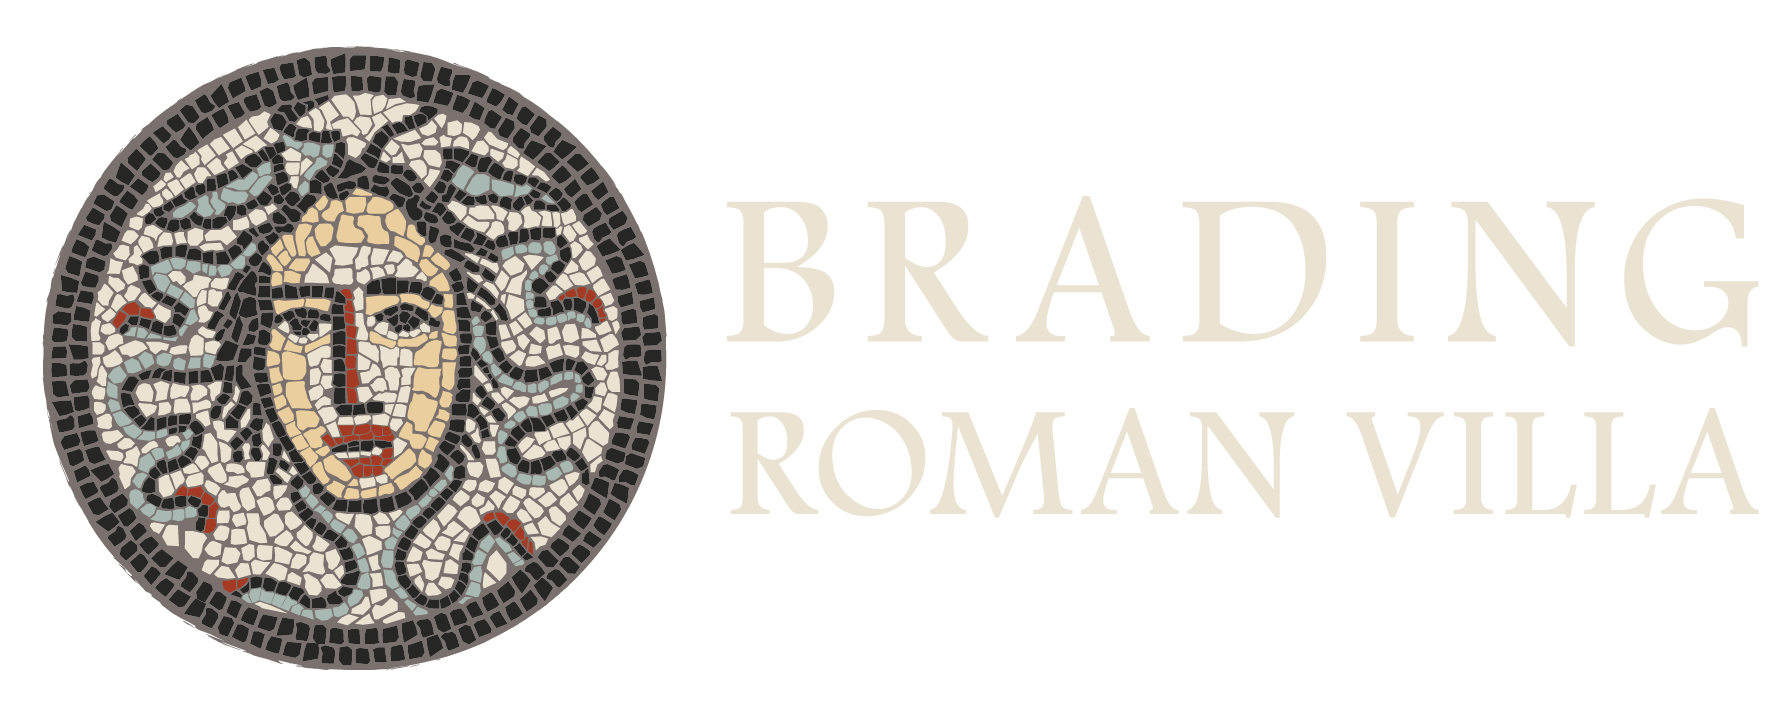 Brading Roman Villa